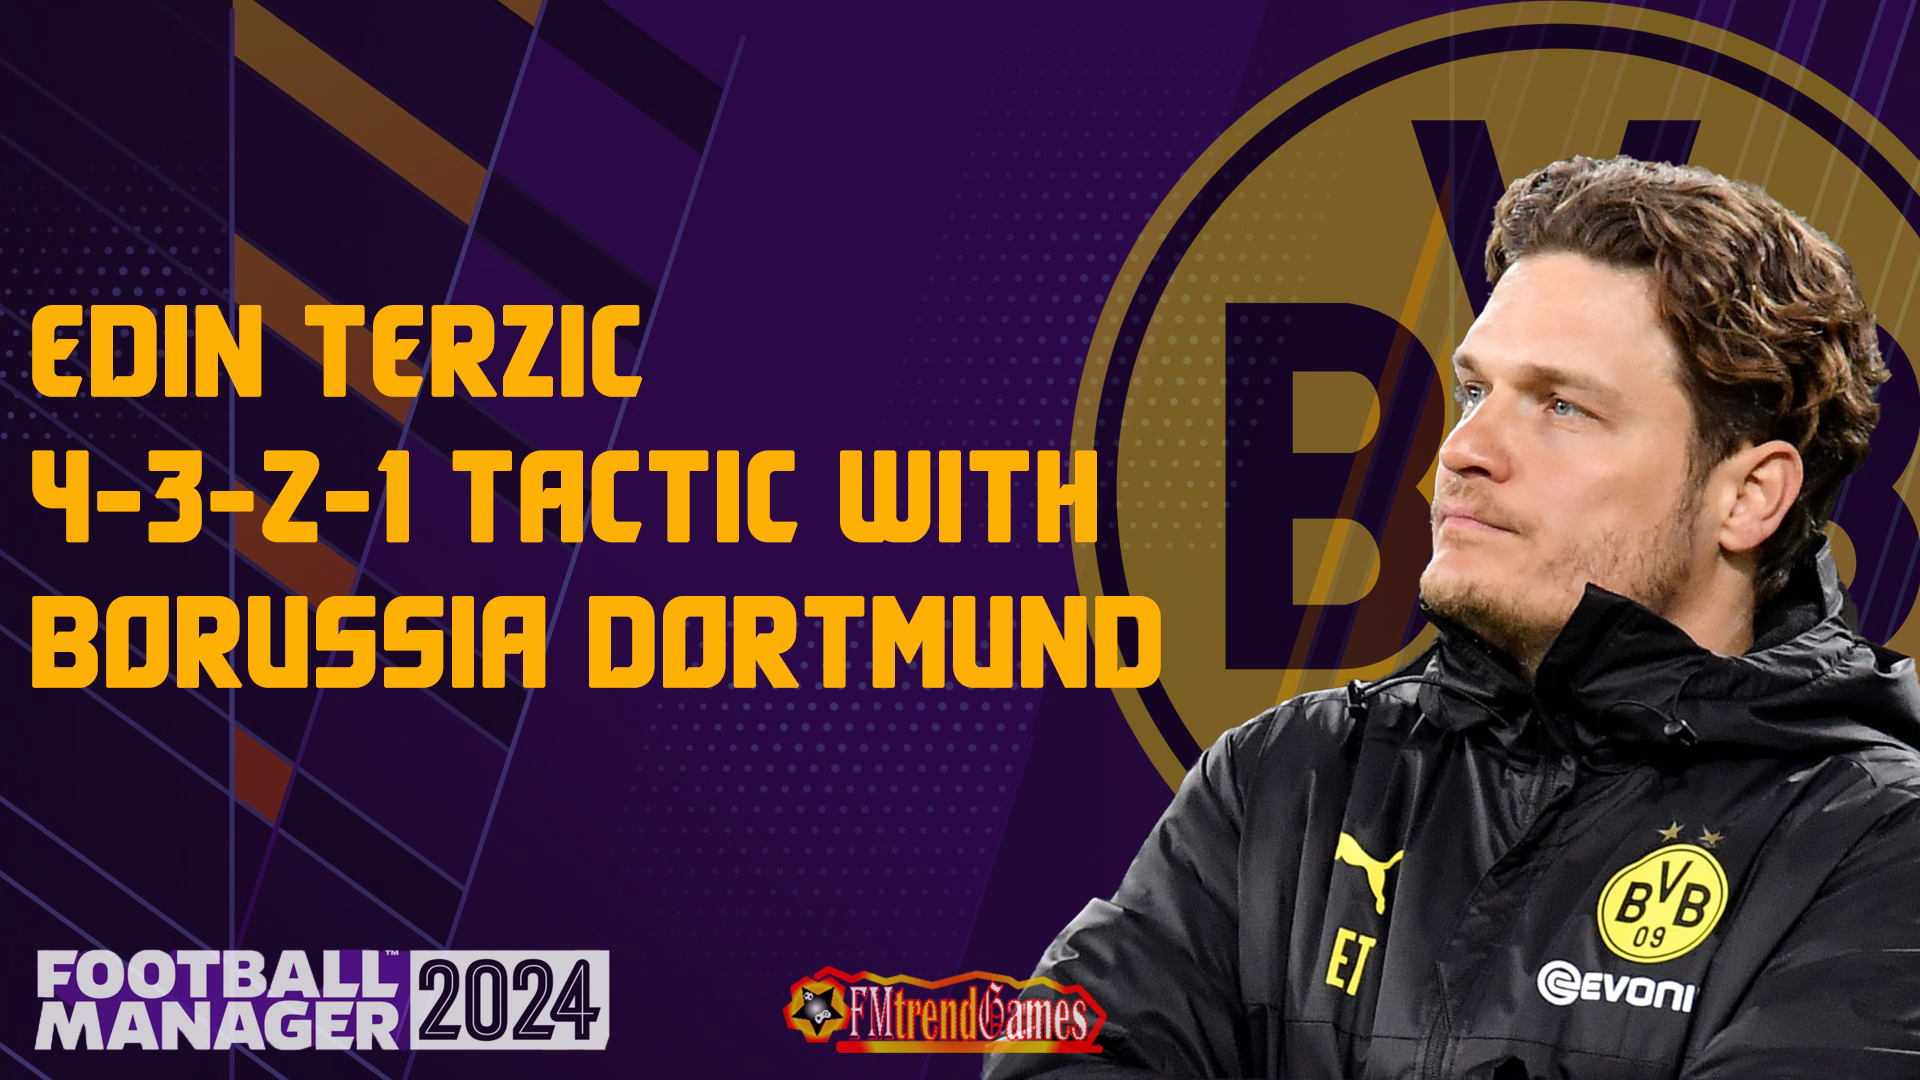 fm24 Edin Terzic Tactic-with Borussia Dortmund